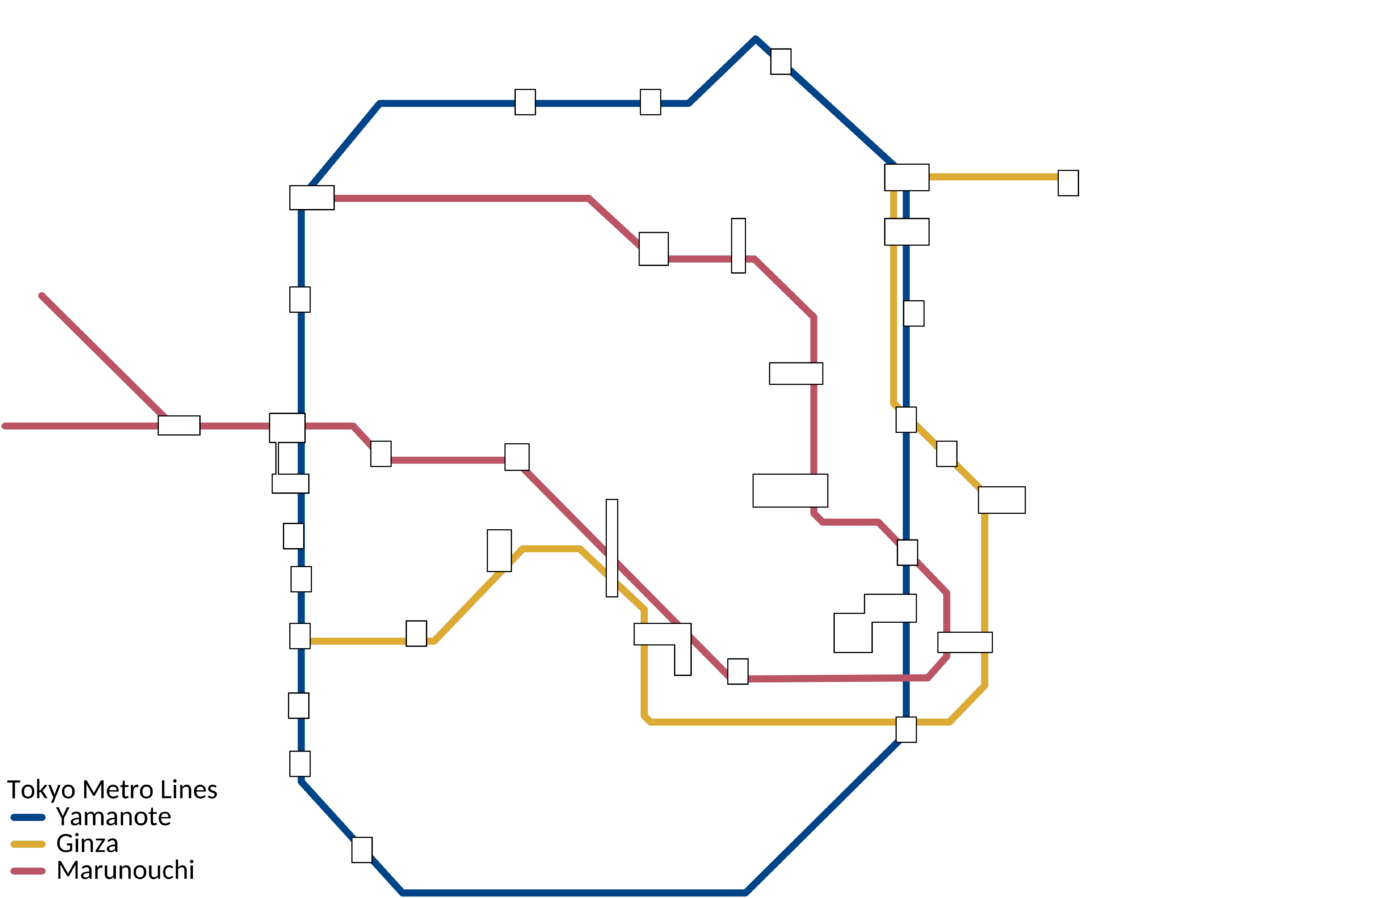 Tokyo metro in high-contrast scheme